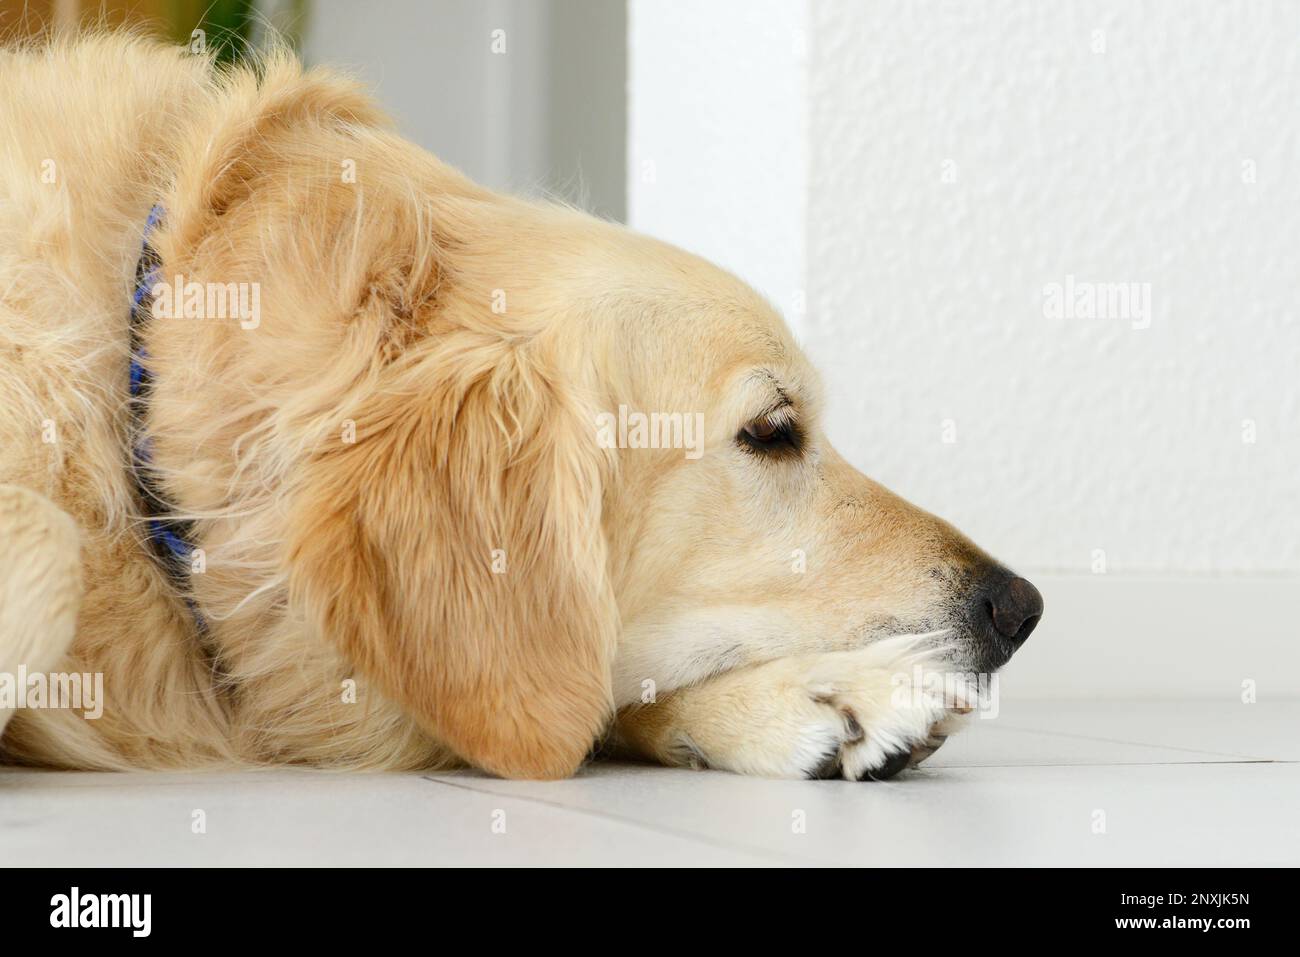 golden retriever dog lying and sleep on white tile Stock Photo